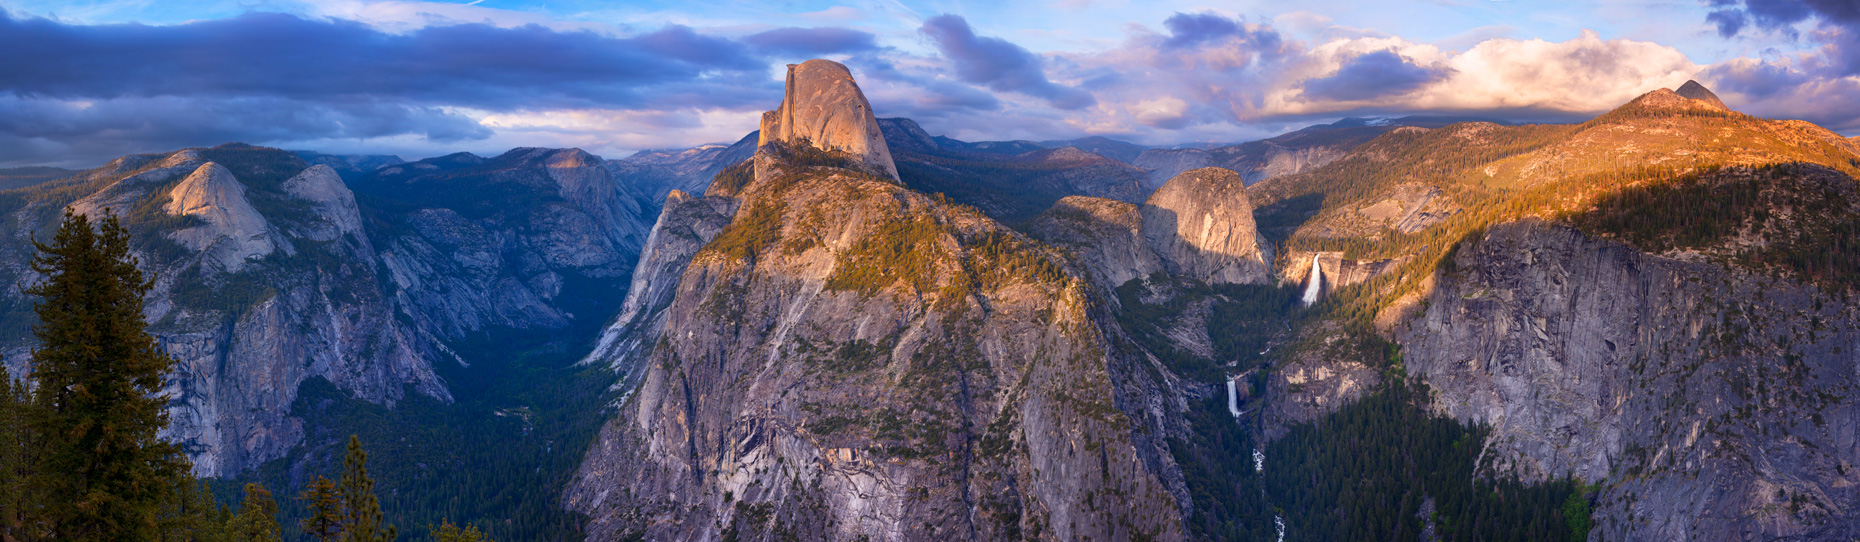 Yosemite-Glarier-Point-Pano-2-copy